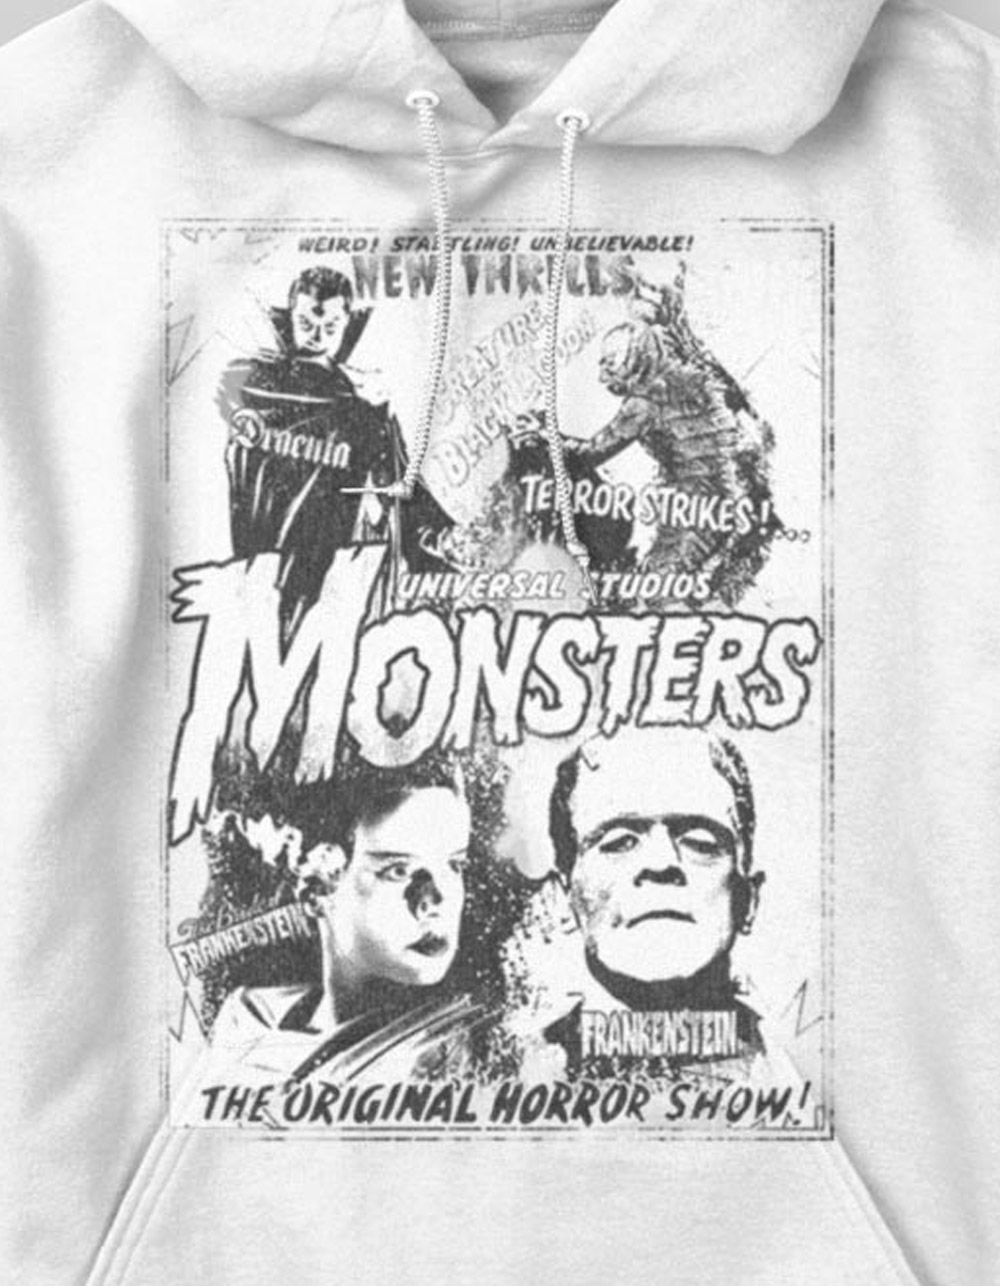 Dracula Webs Adult Black Graphic T-Shirt